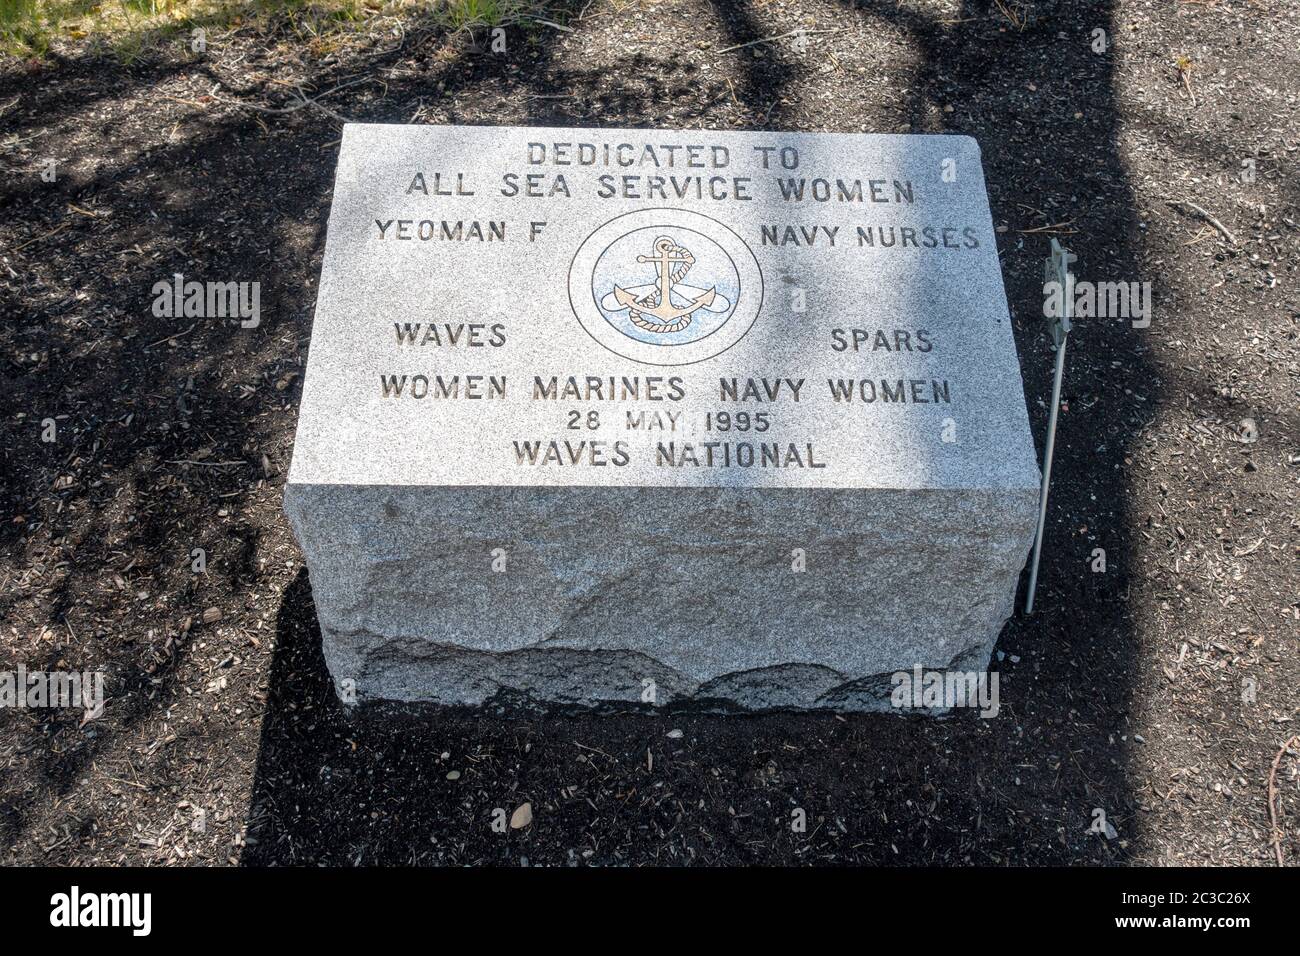 Engraved granite memorial stone Dedicated to All Sea Service Women, Women Marines, Navy Women, Navy Nurses, Yeoman F, Waves Spars Stock Photo